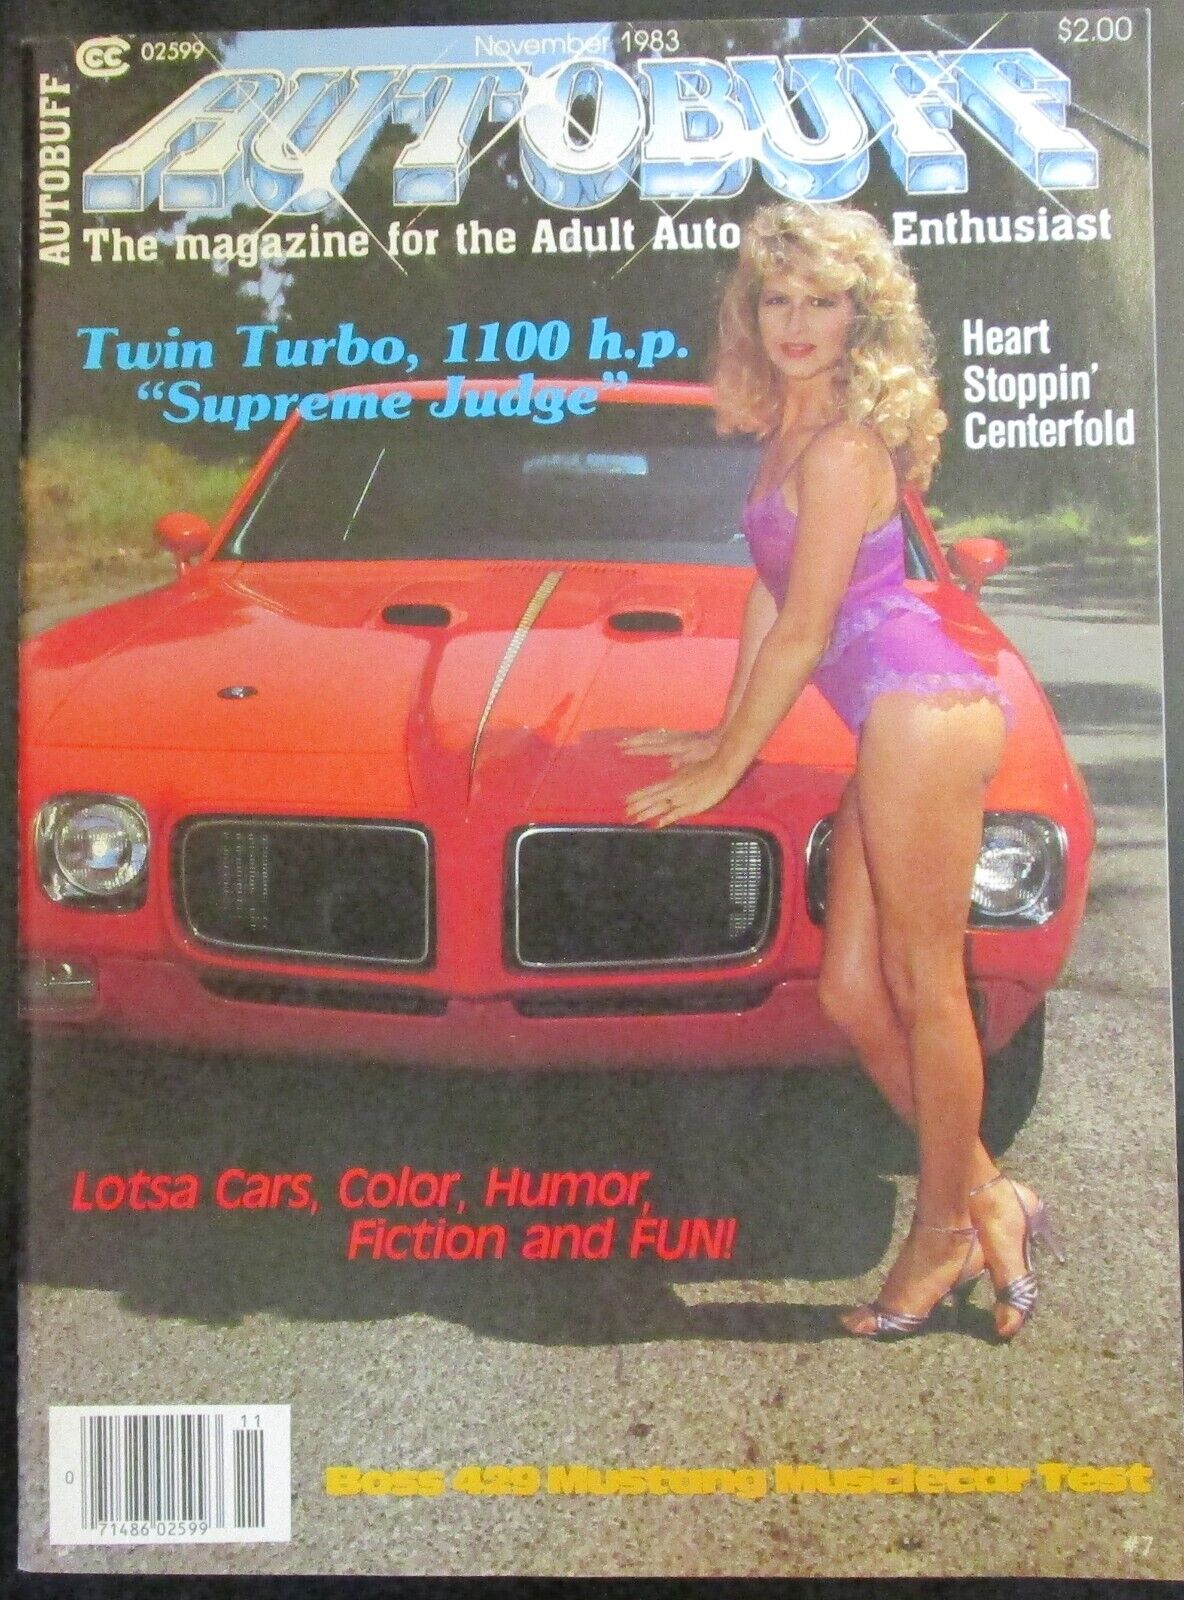 Autobuff Magazine November 1983 Volume 2 Number 6 Issue #7